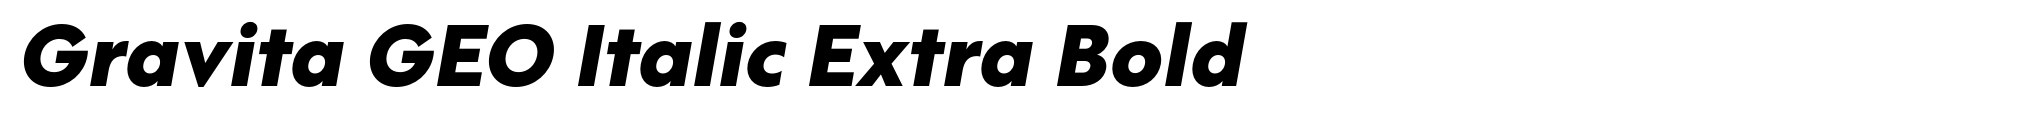 Gravita GEO Italic Extra Bold image